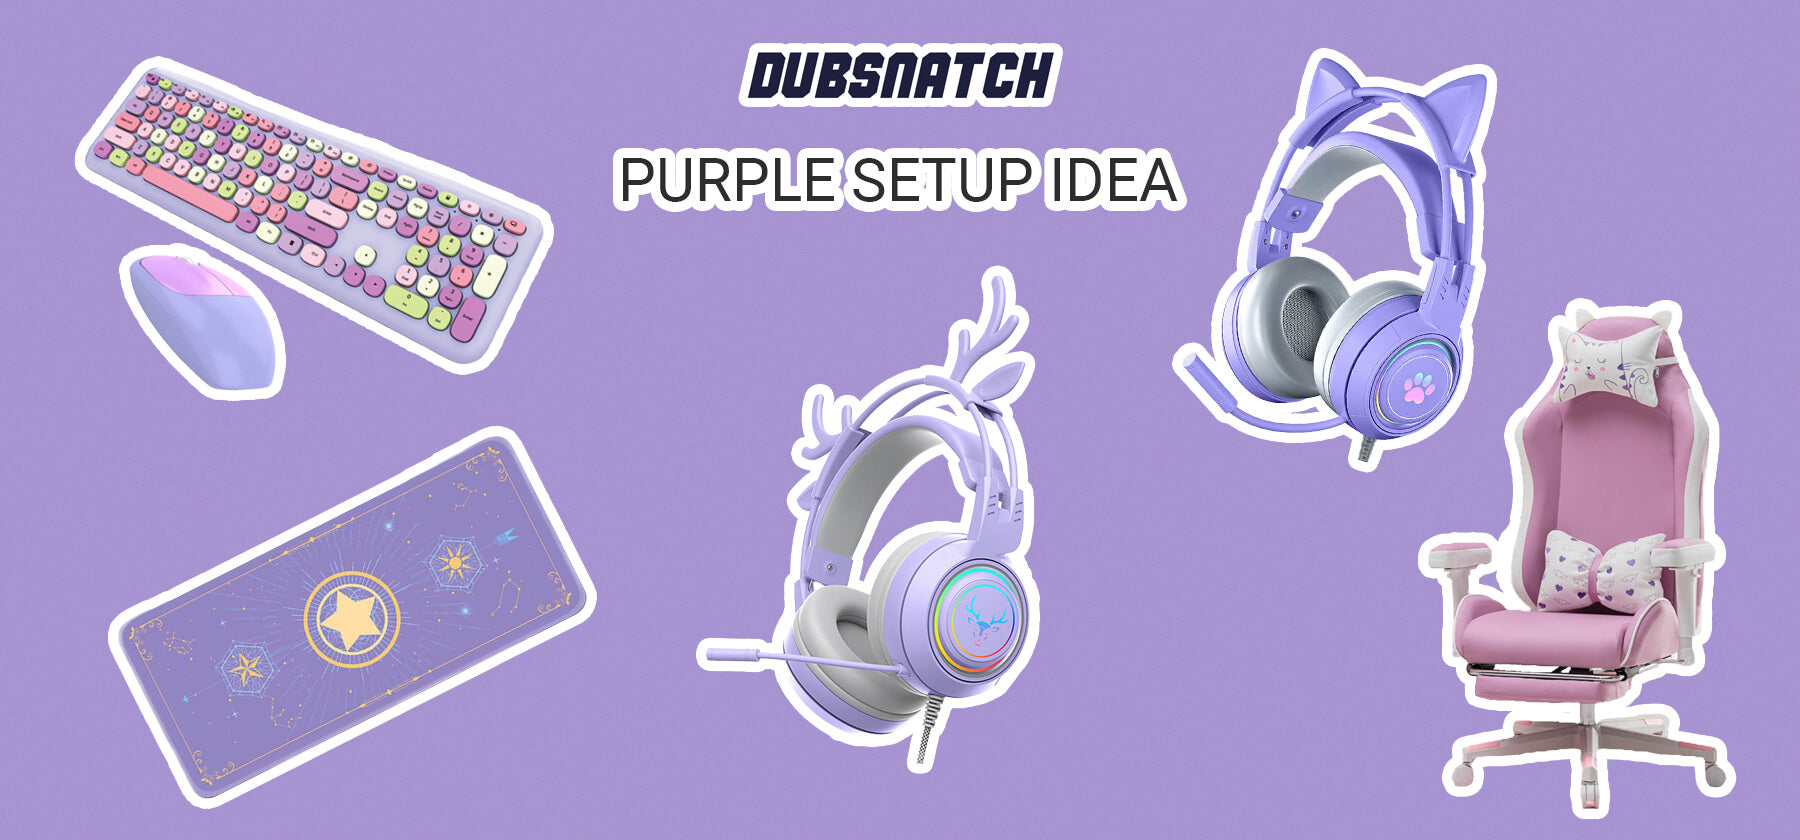 Shoppable purple setup idea